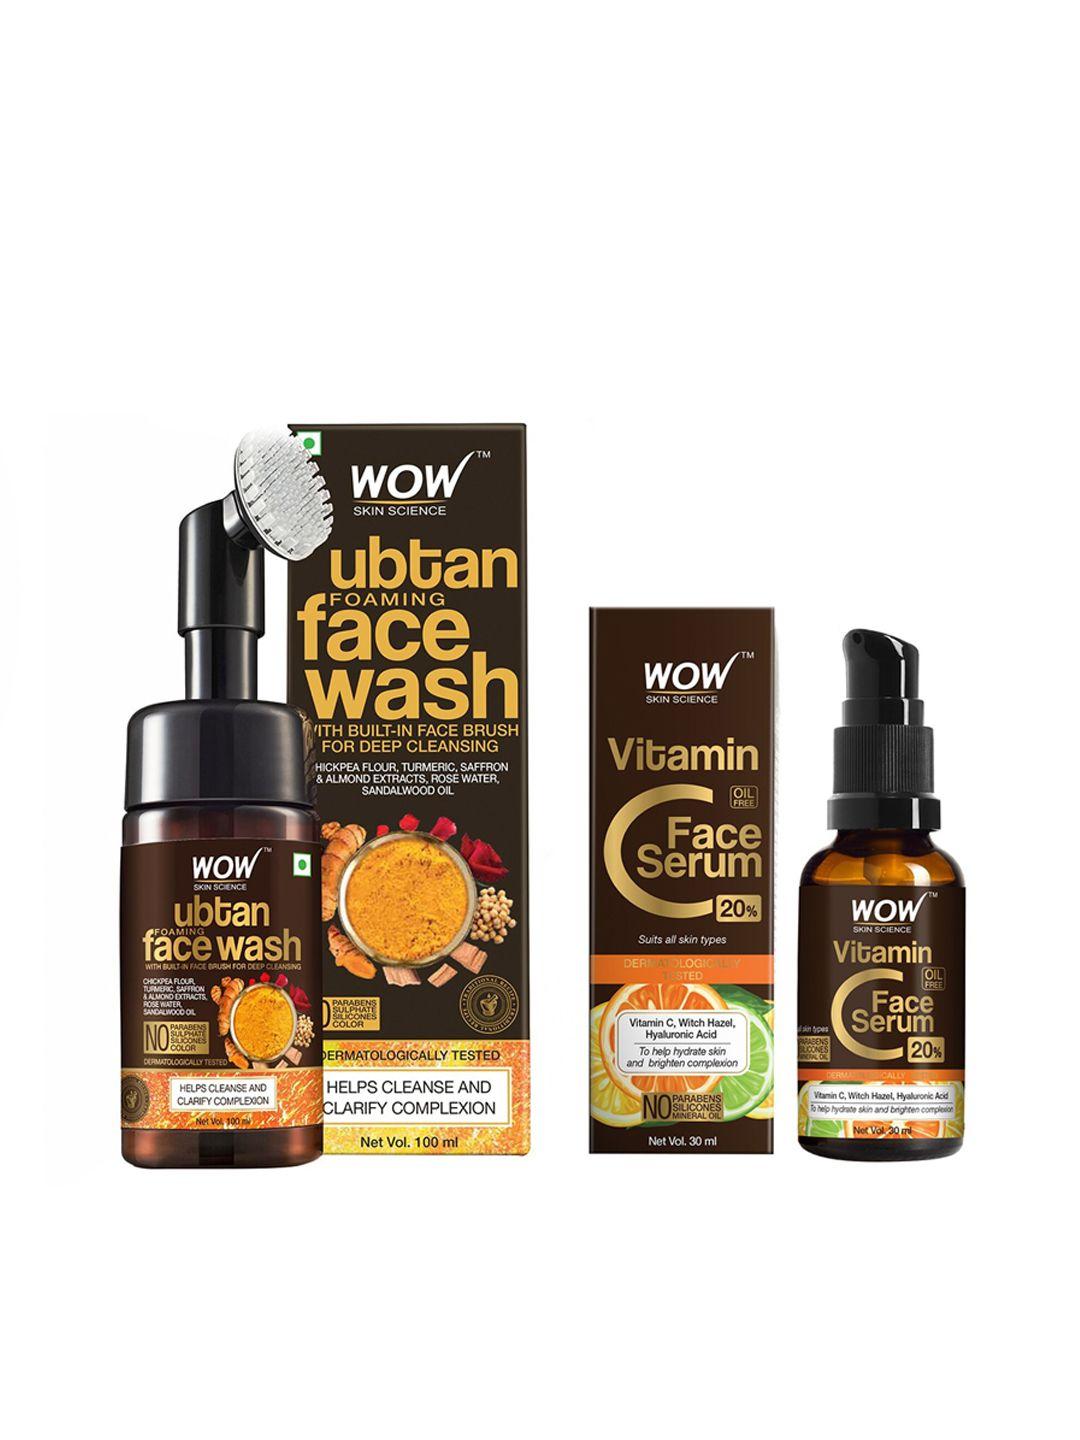 wow skin science unisex set of ubtan face wash & vitamin c face serum - 130 ml